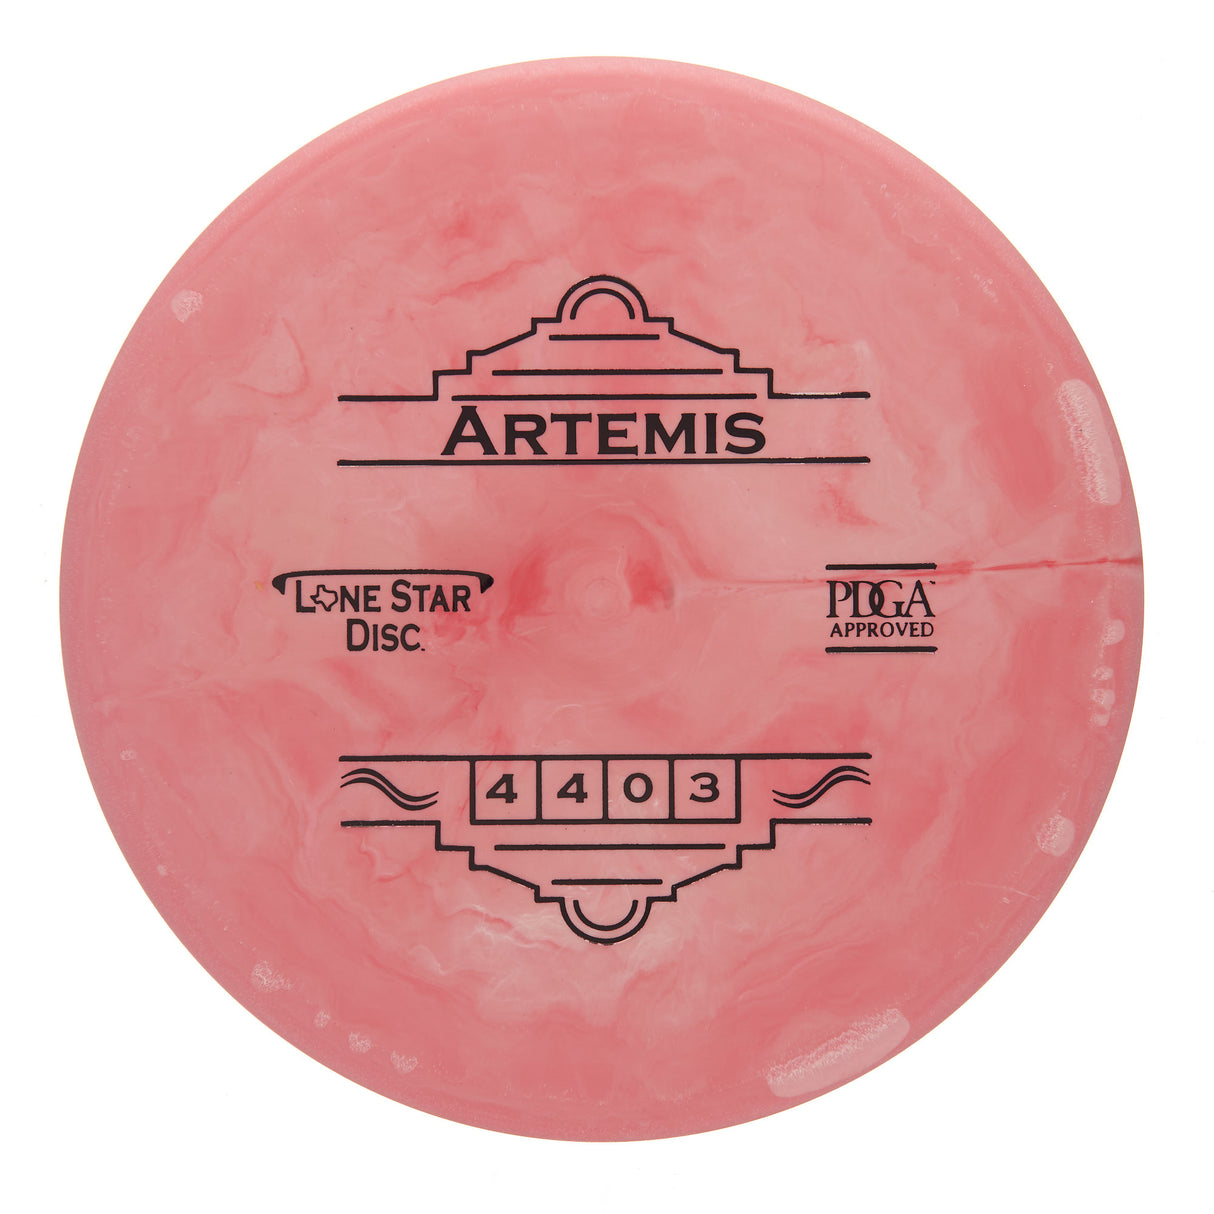 Lone Star Disc Artemis - Delta 2 170g | Style 0002